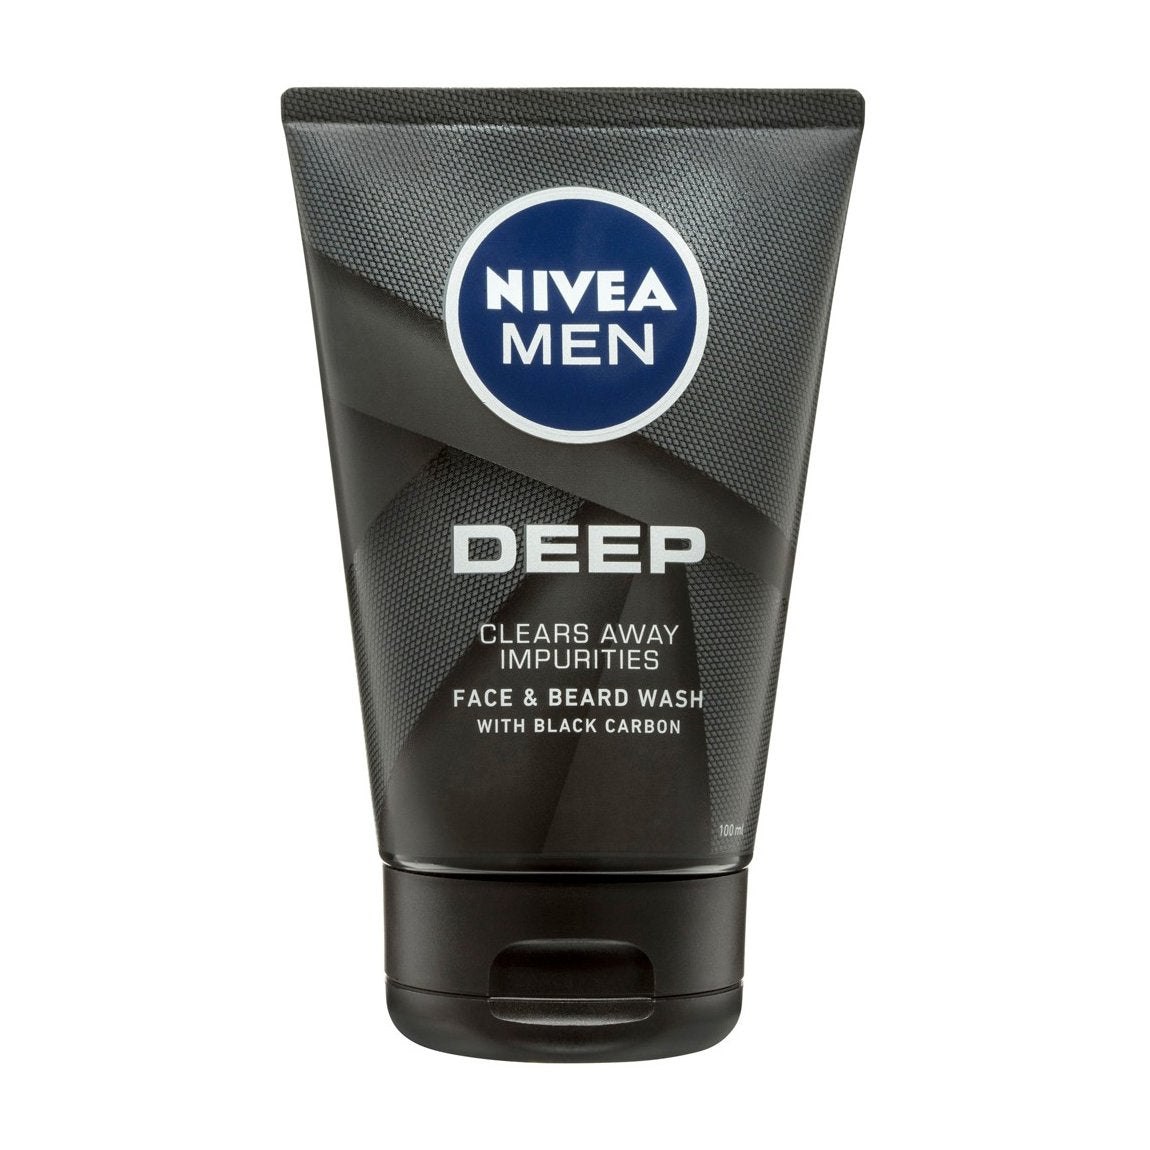 Nivea Men Deep Anti Impurities Clean Face & Beard Wash - 100ml - Bloom Pharmacy